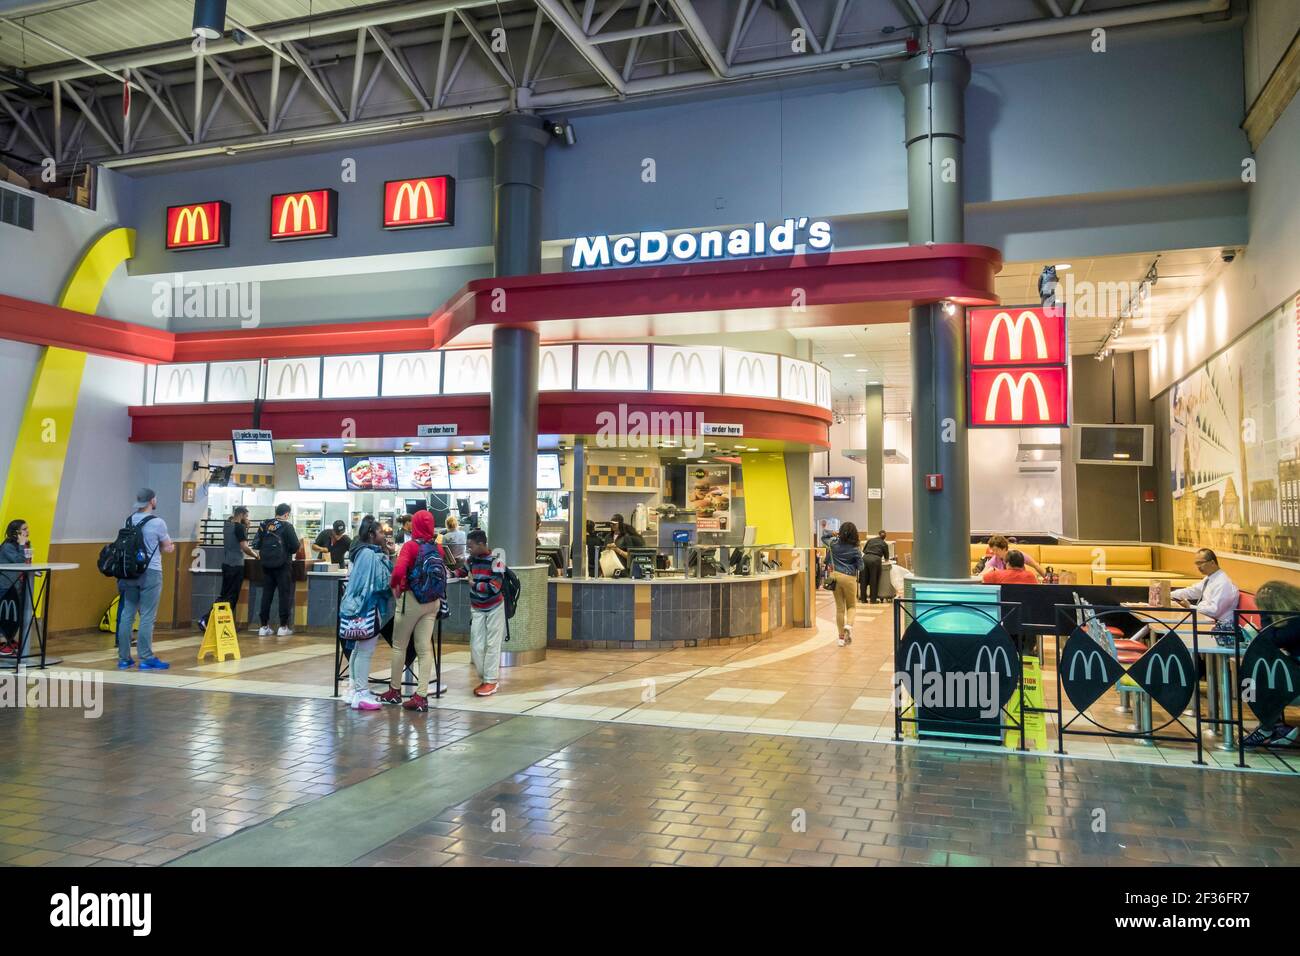 Washington DC,Union Station,railroad train terminal food court,McDonald's fast food hamburger restaurant counter line queue interior inside, Stock Photo